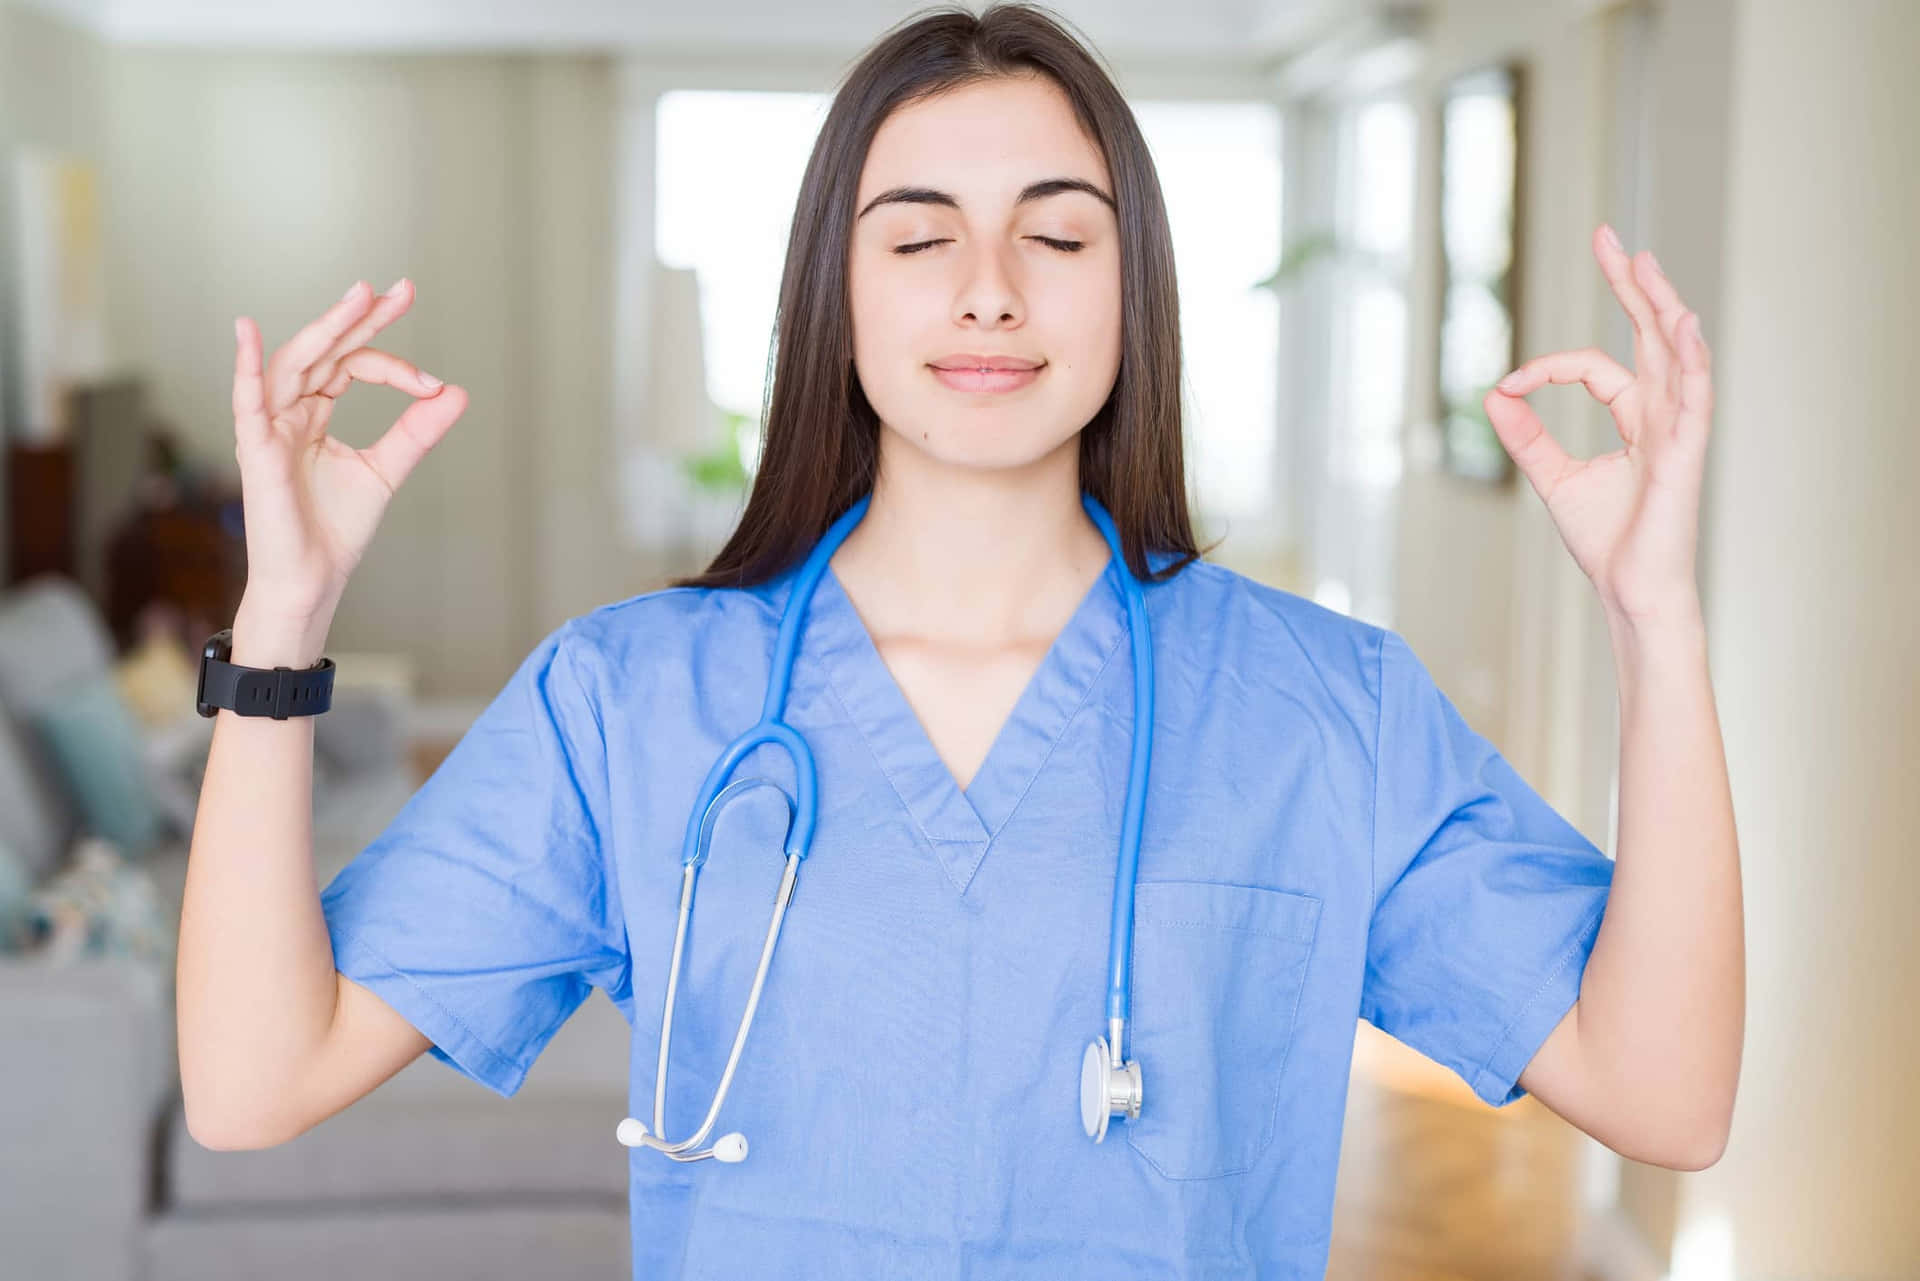 A Nurse In A Blue Scrubs Making A Yin Yang Sign